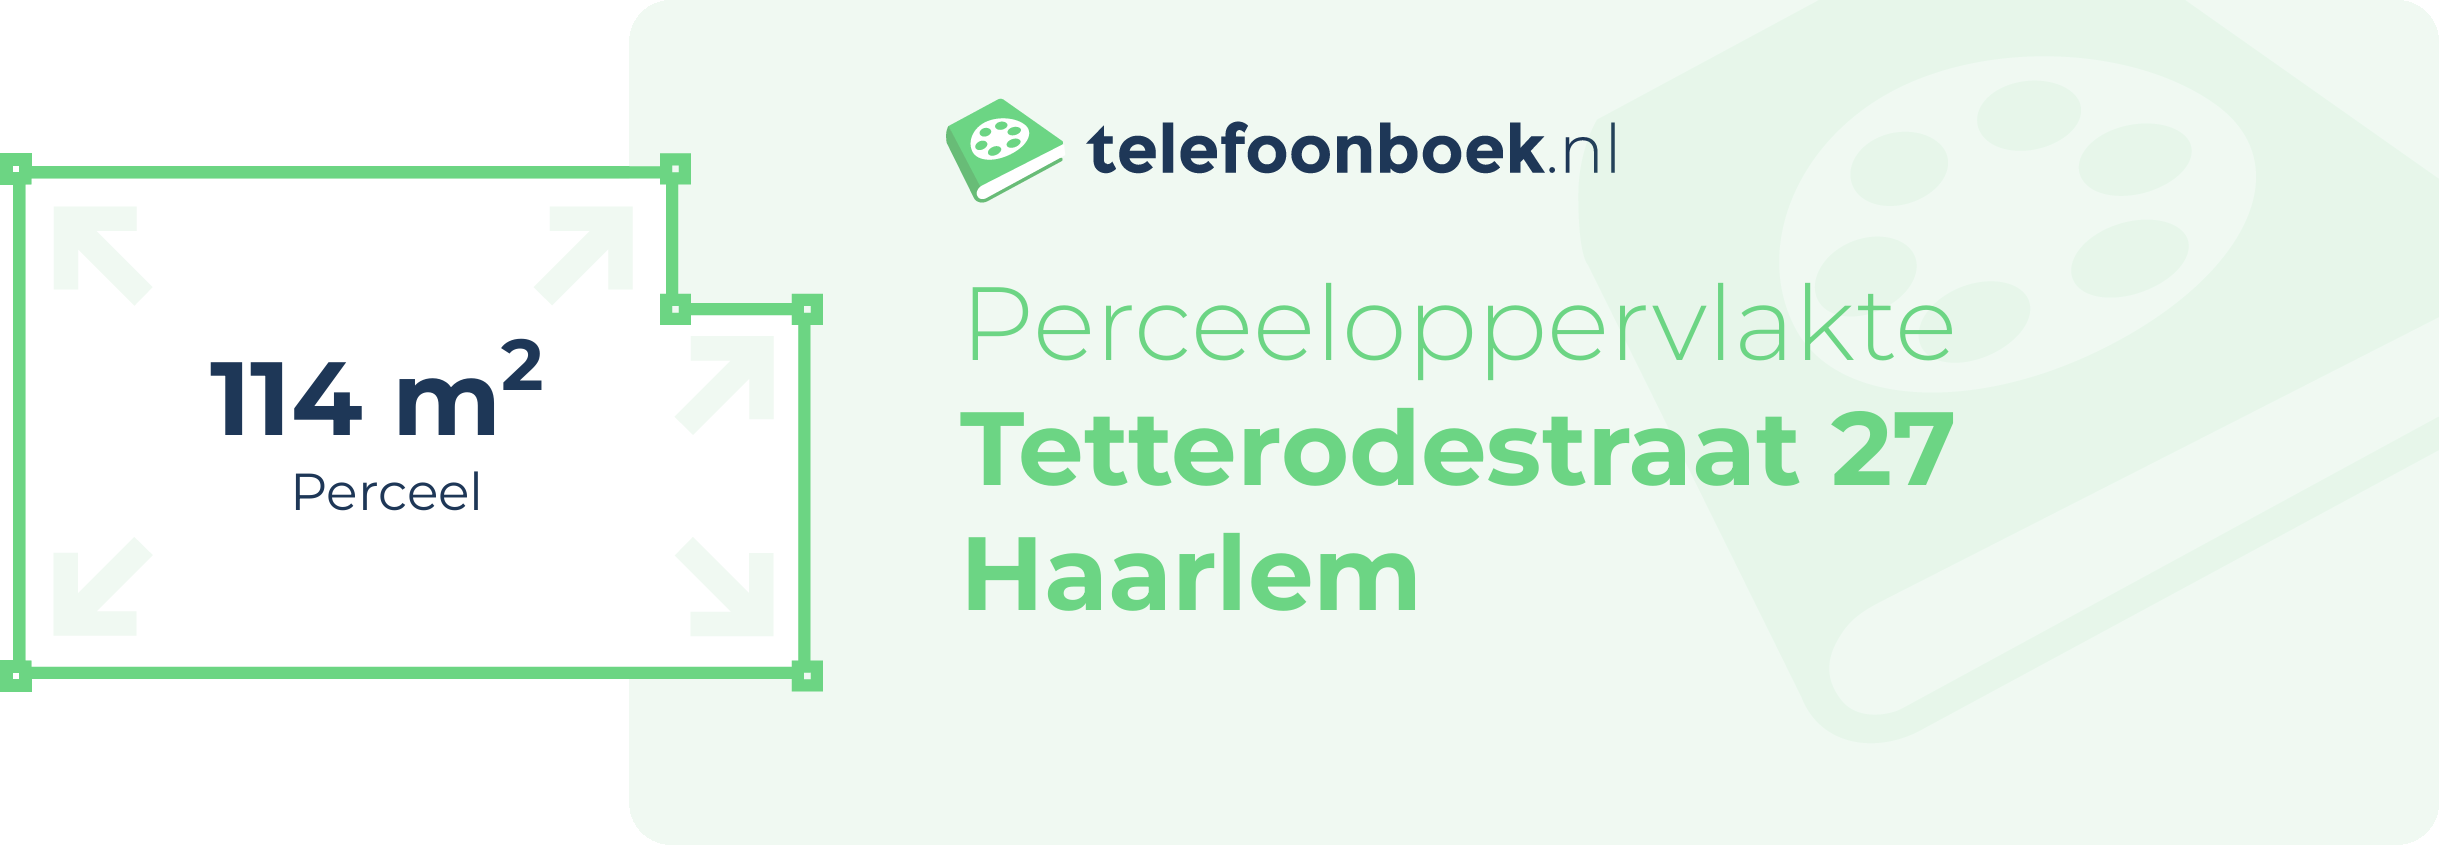 Perceeloppervlakte Tetterodestraat 27 Haarlem